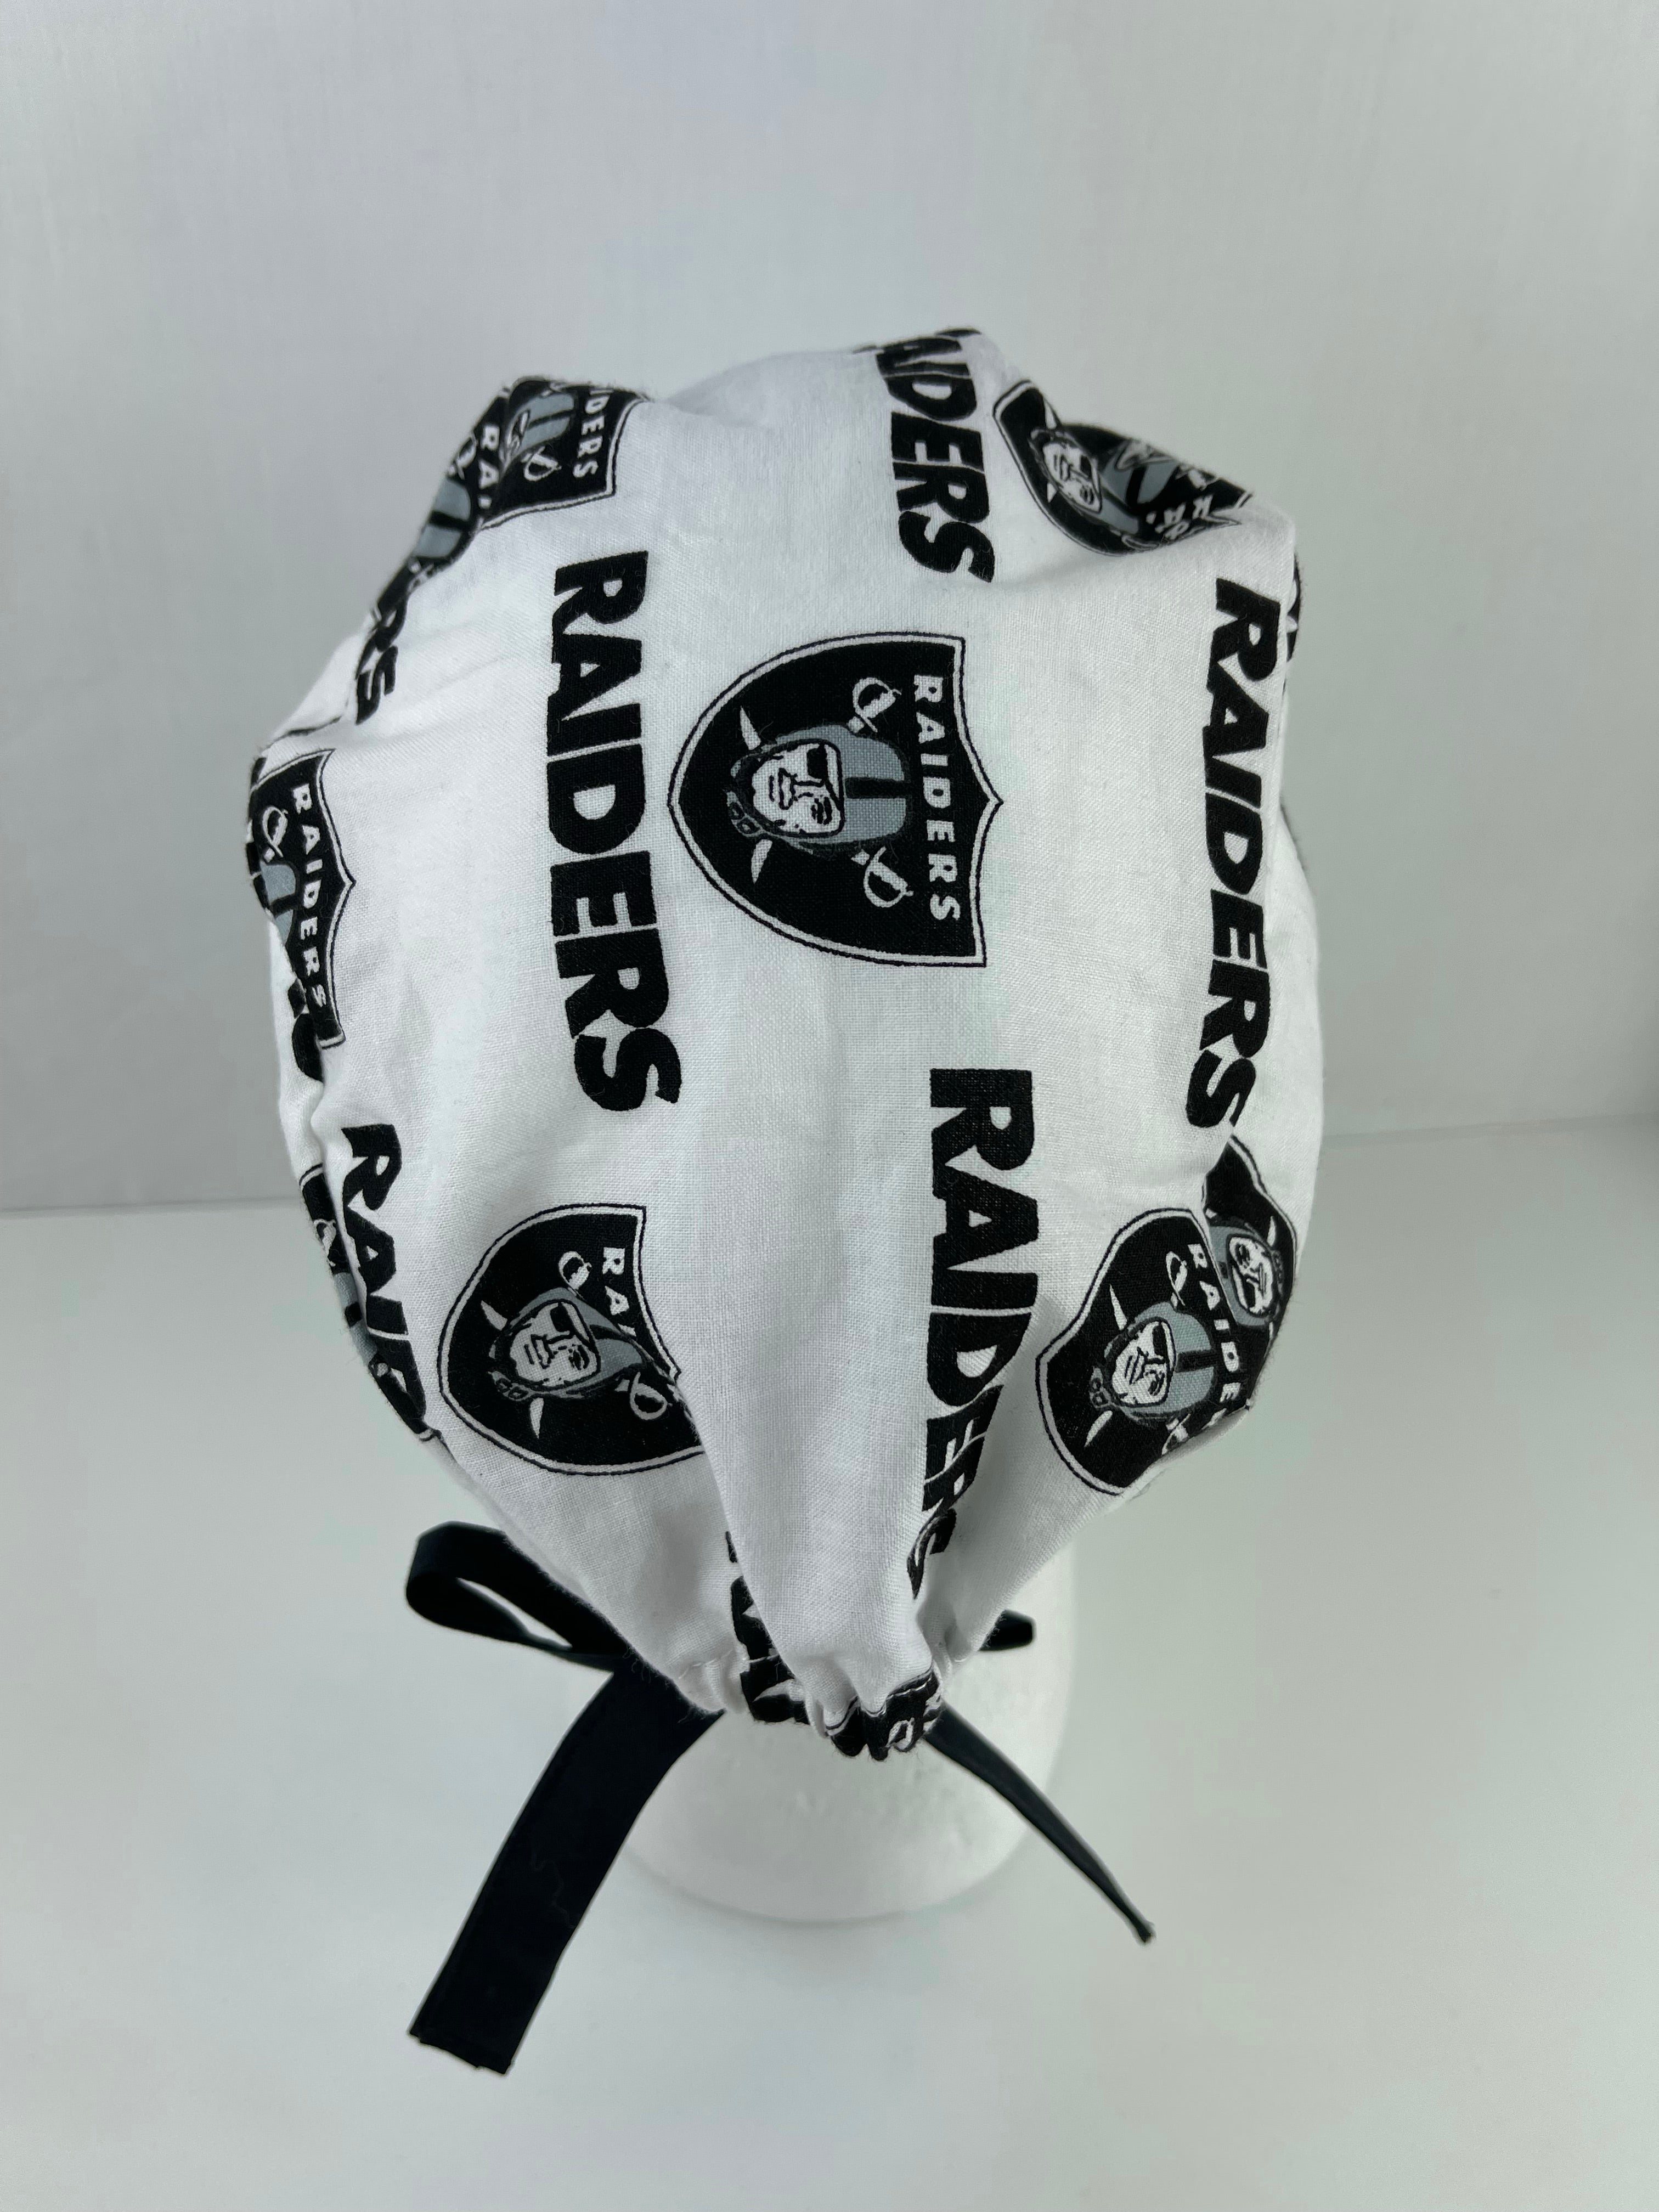 Las Vegas Raiders Skull Cap NFL Team Apparel One Size NWT